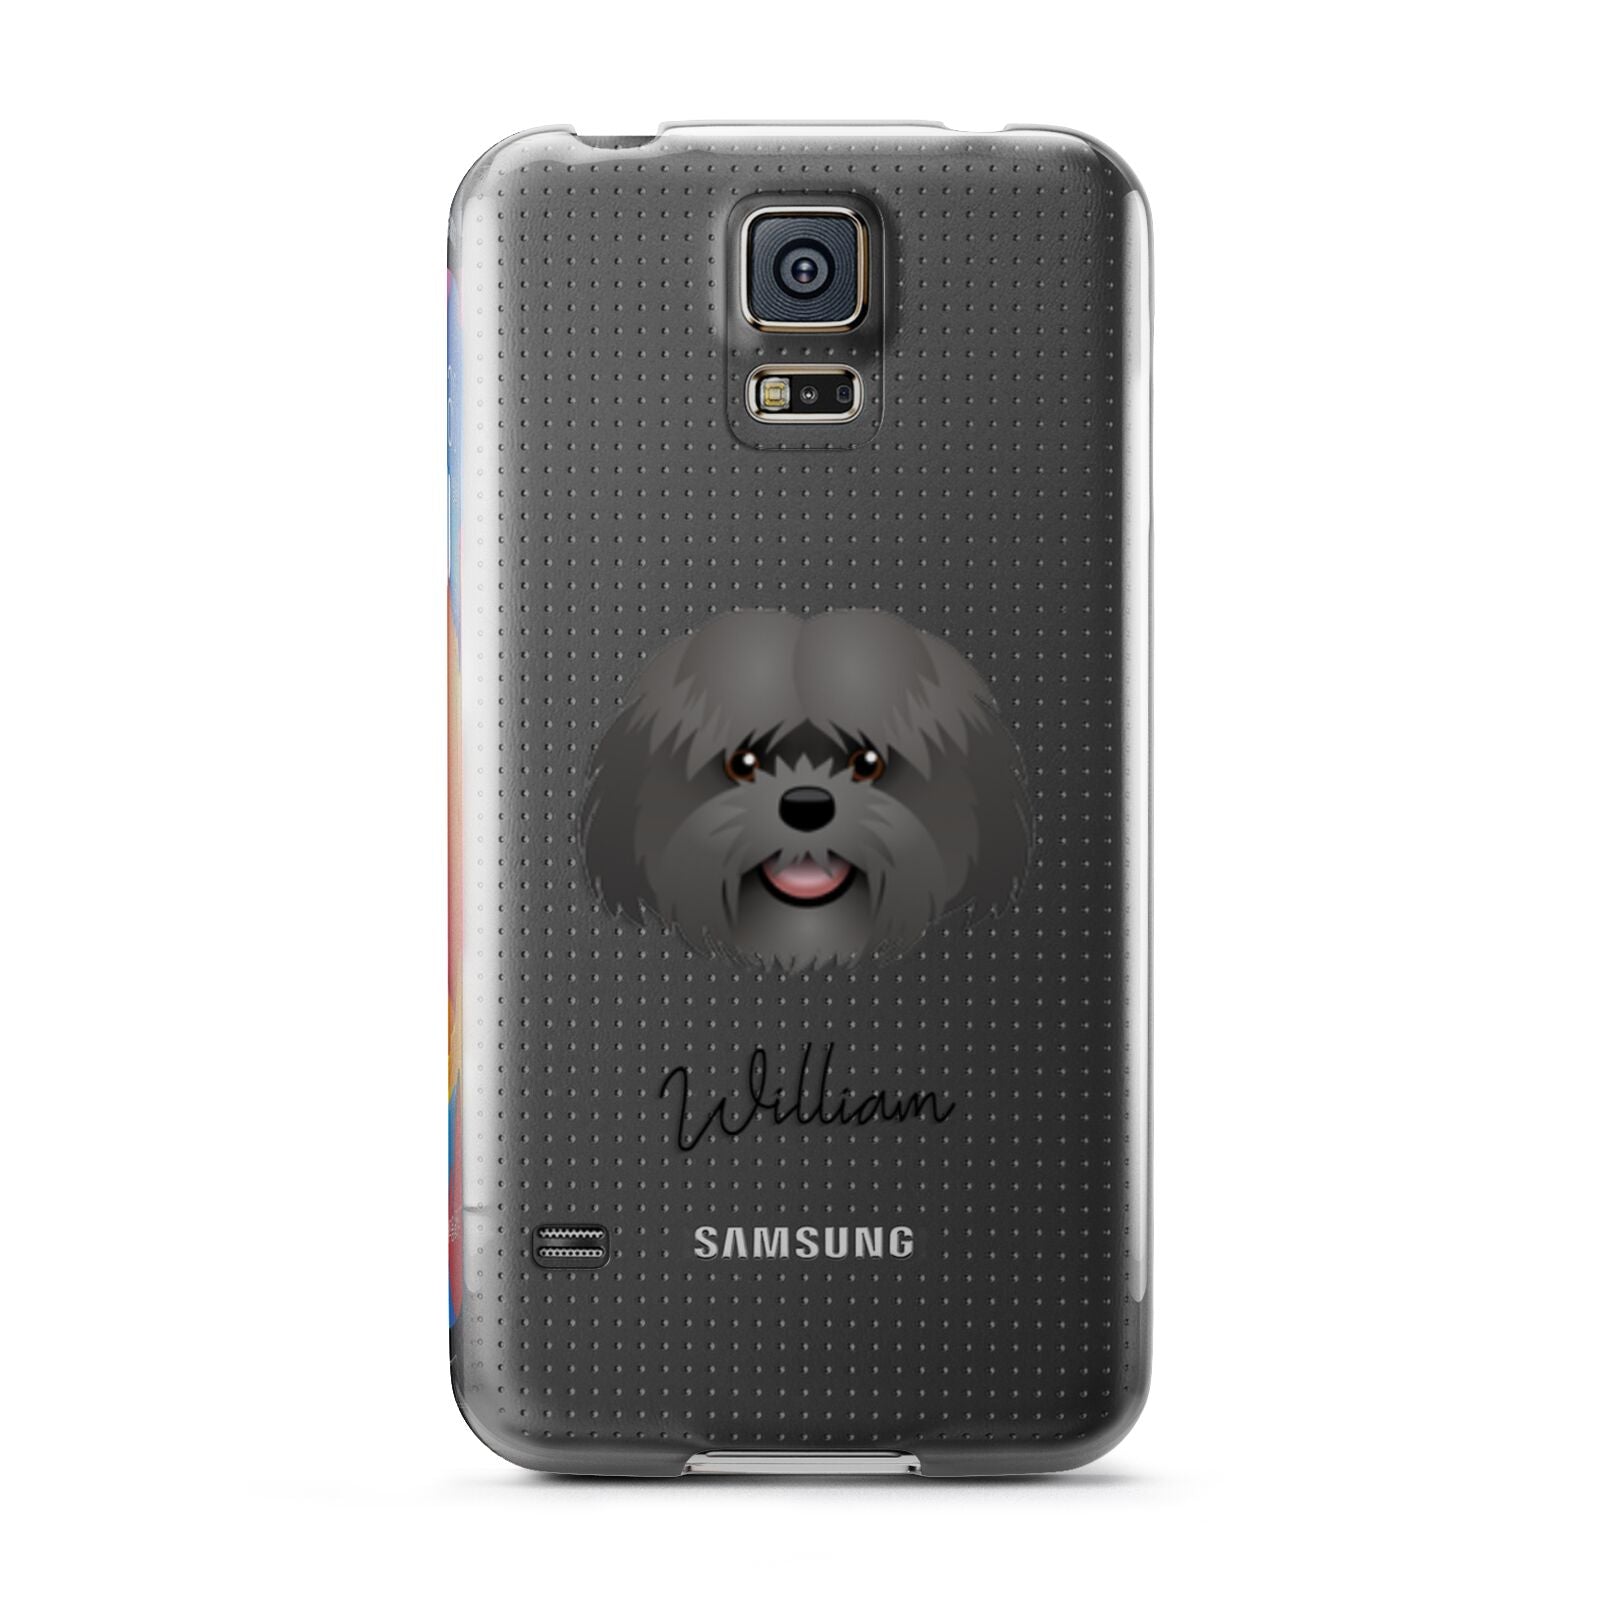 Mal Shi Personalised Samsung Galaxy S5 Case